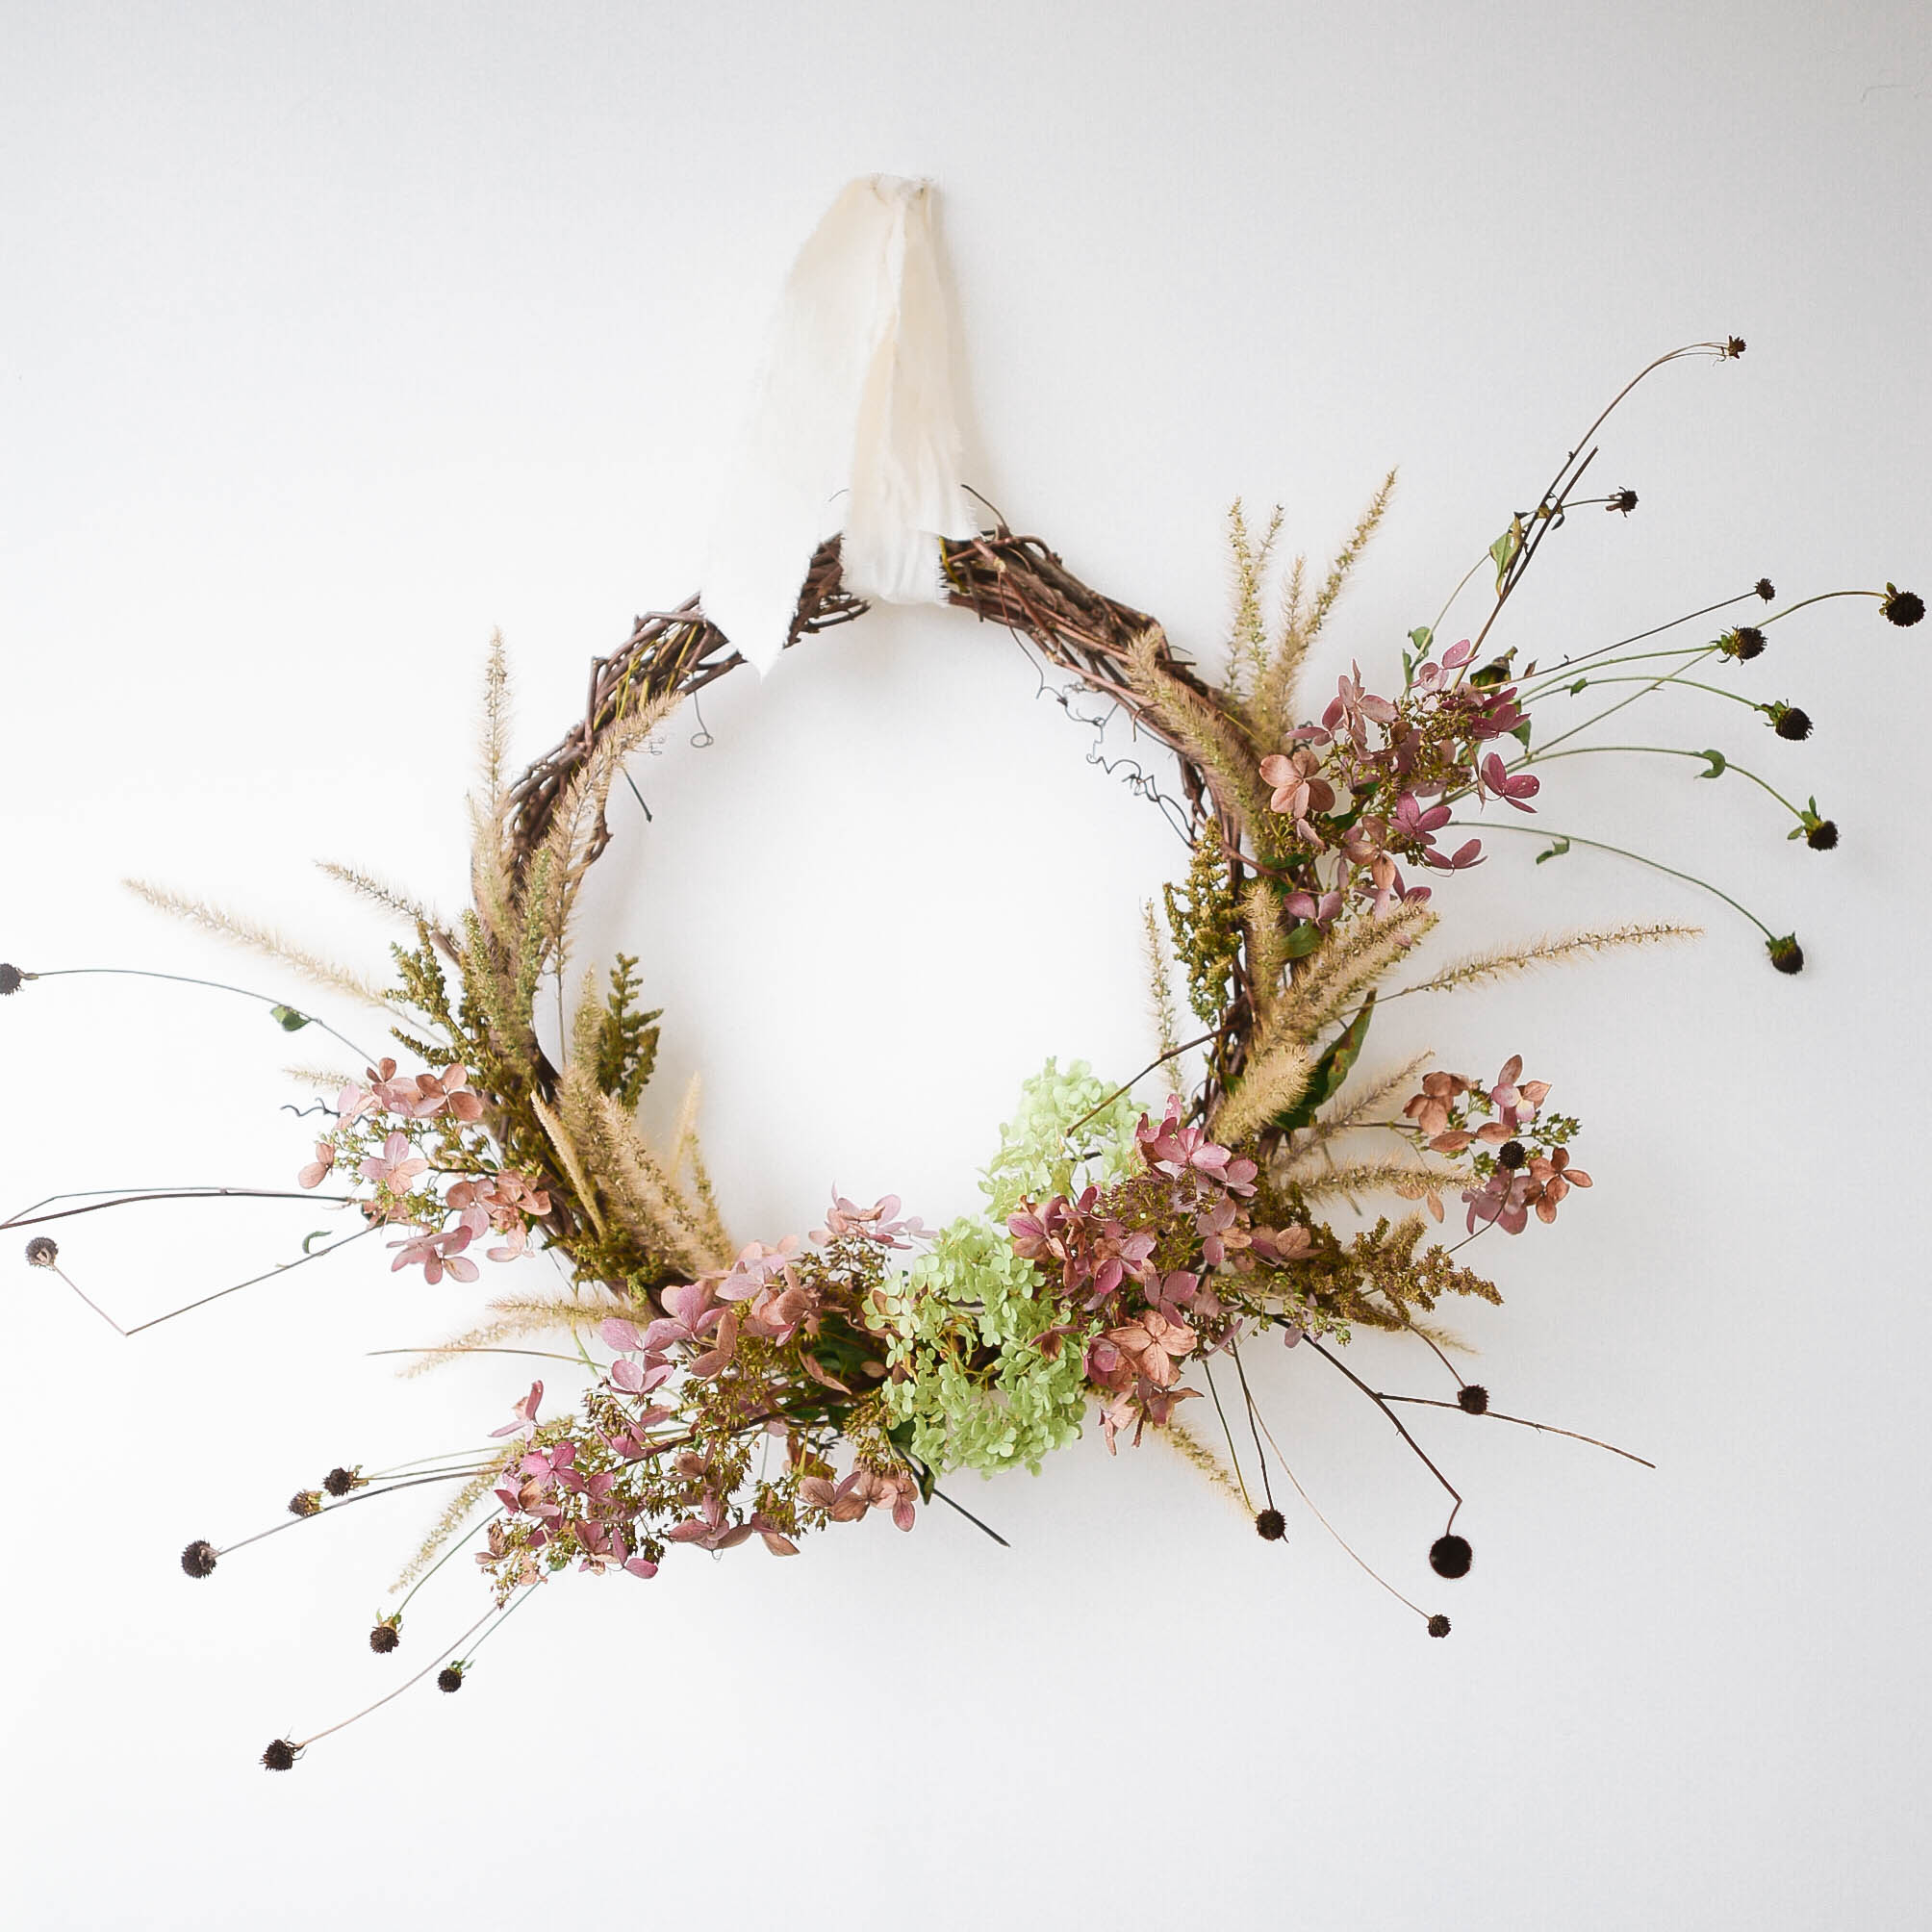 Handmade Grapevine Wreath with Crabapples